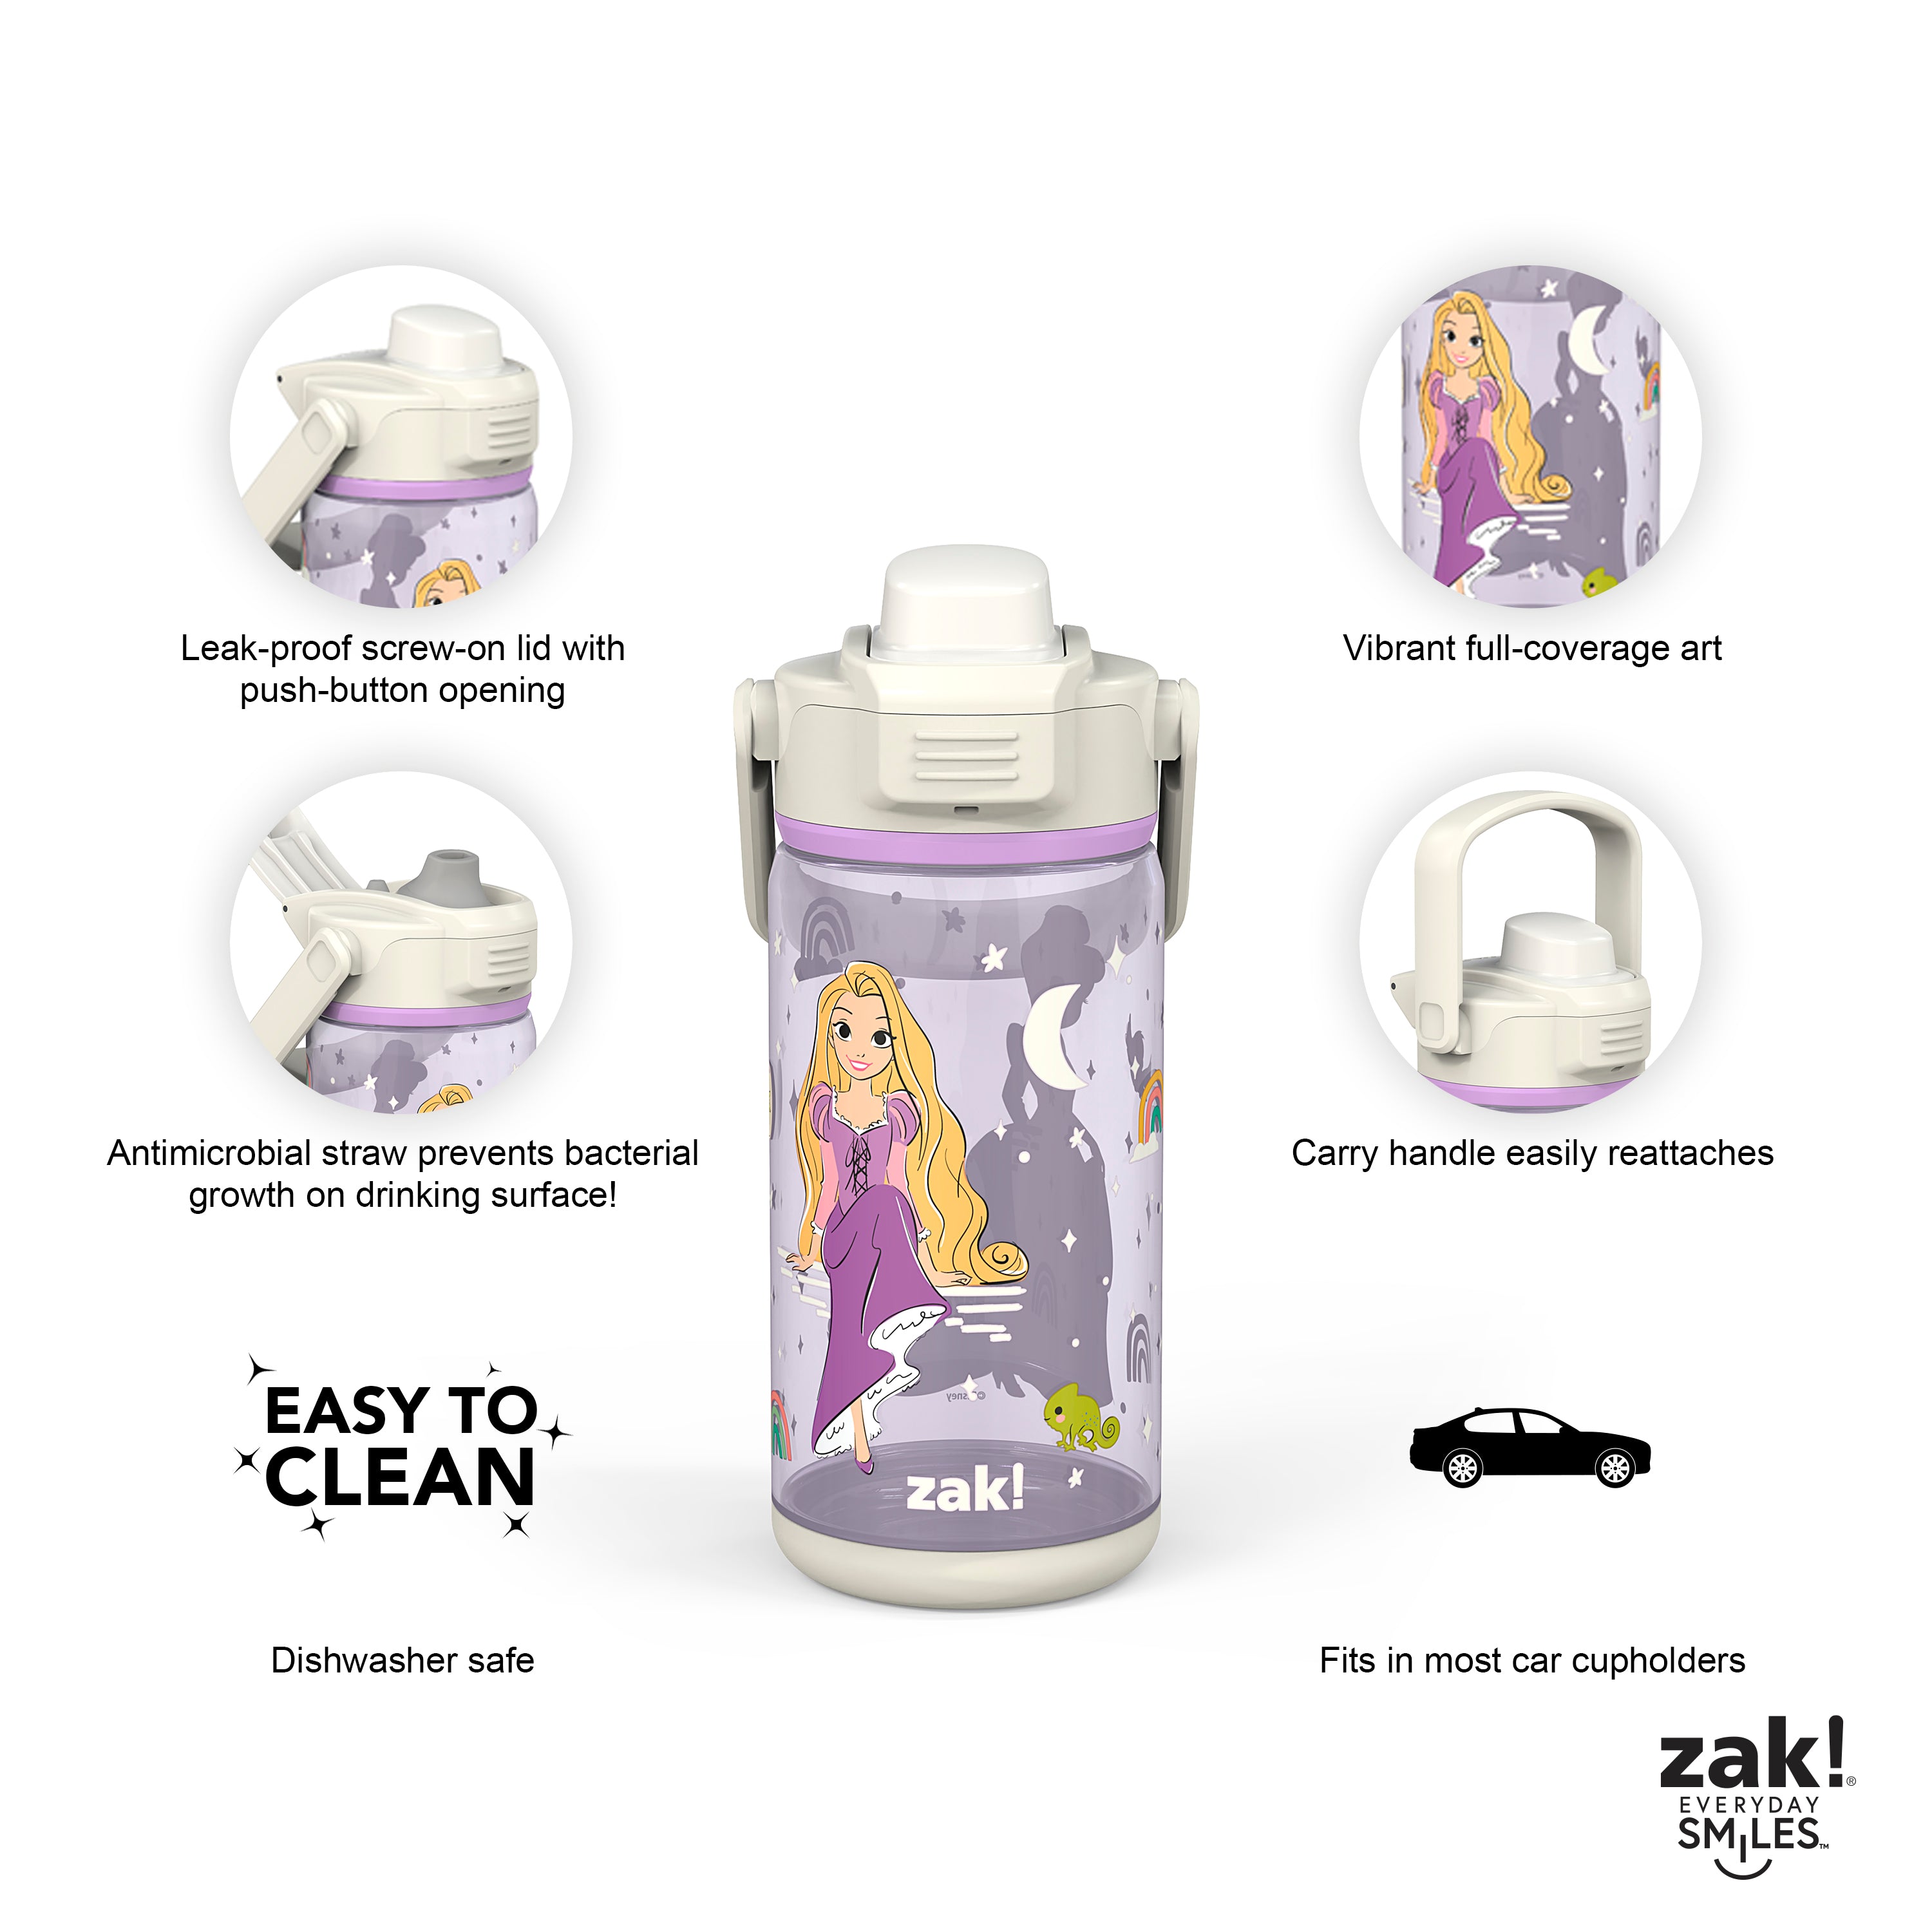 DISNEY FROZEN Zak!® No Leak BPA-Free Plastic 16 oz. Water Bottle Drink  Container